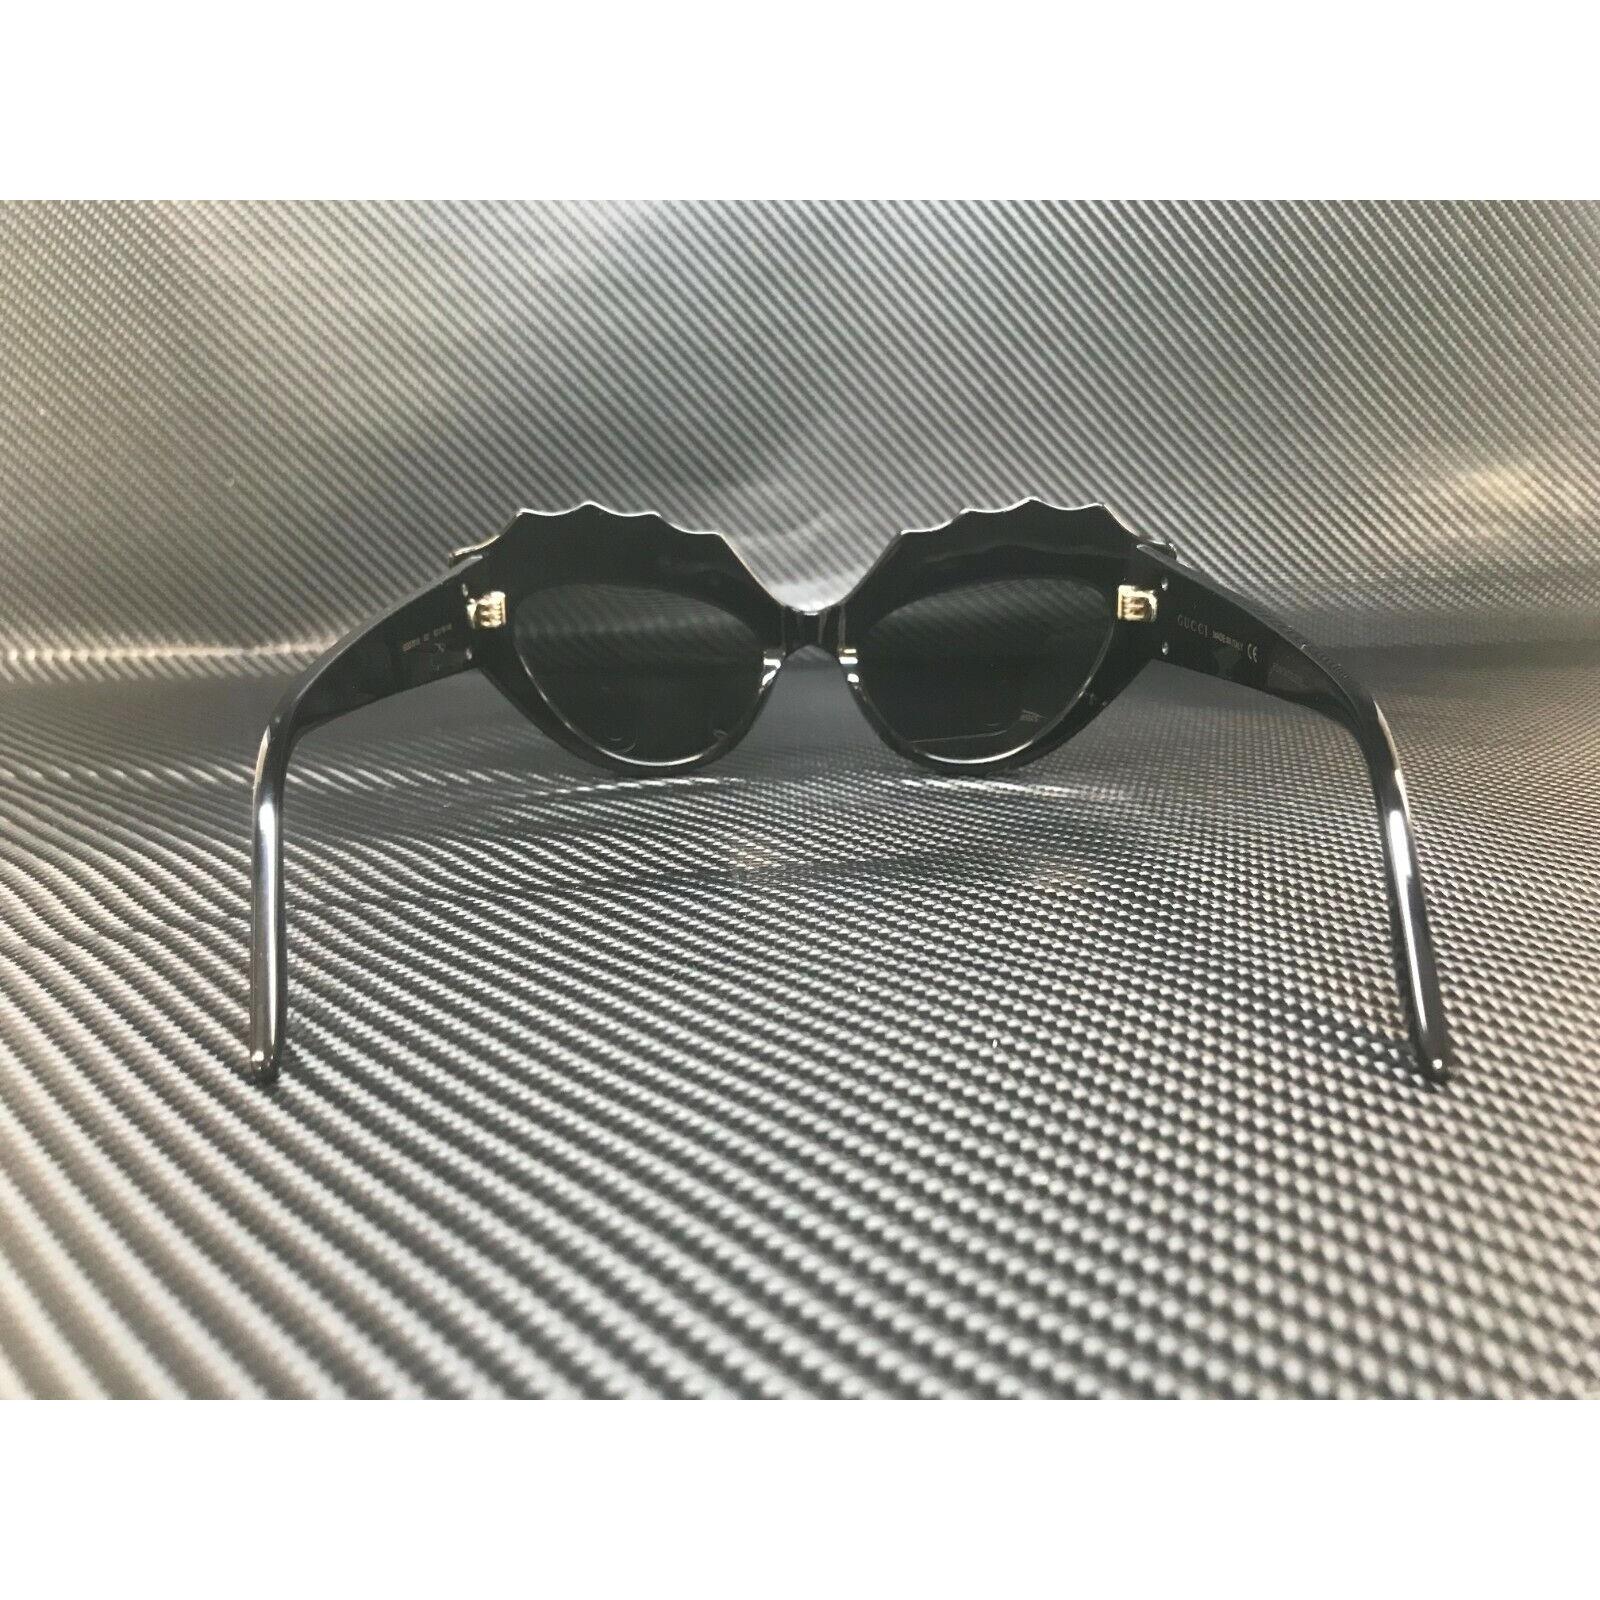 Gucci sunglasses  - Orange Frame, Gray Lens